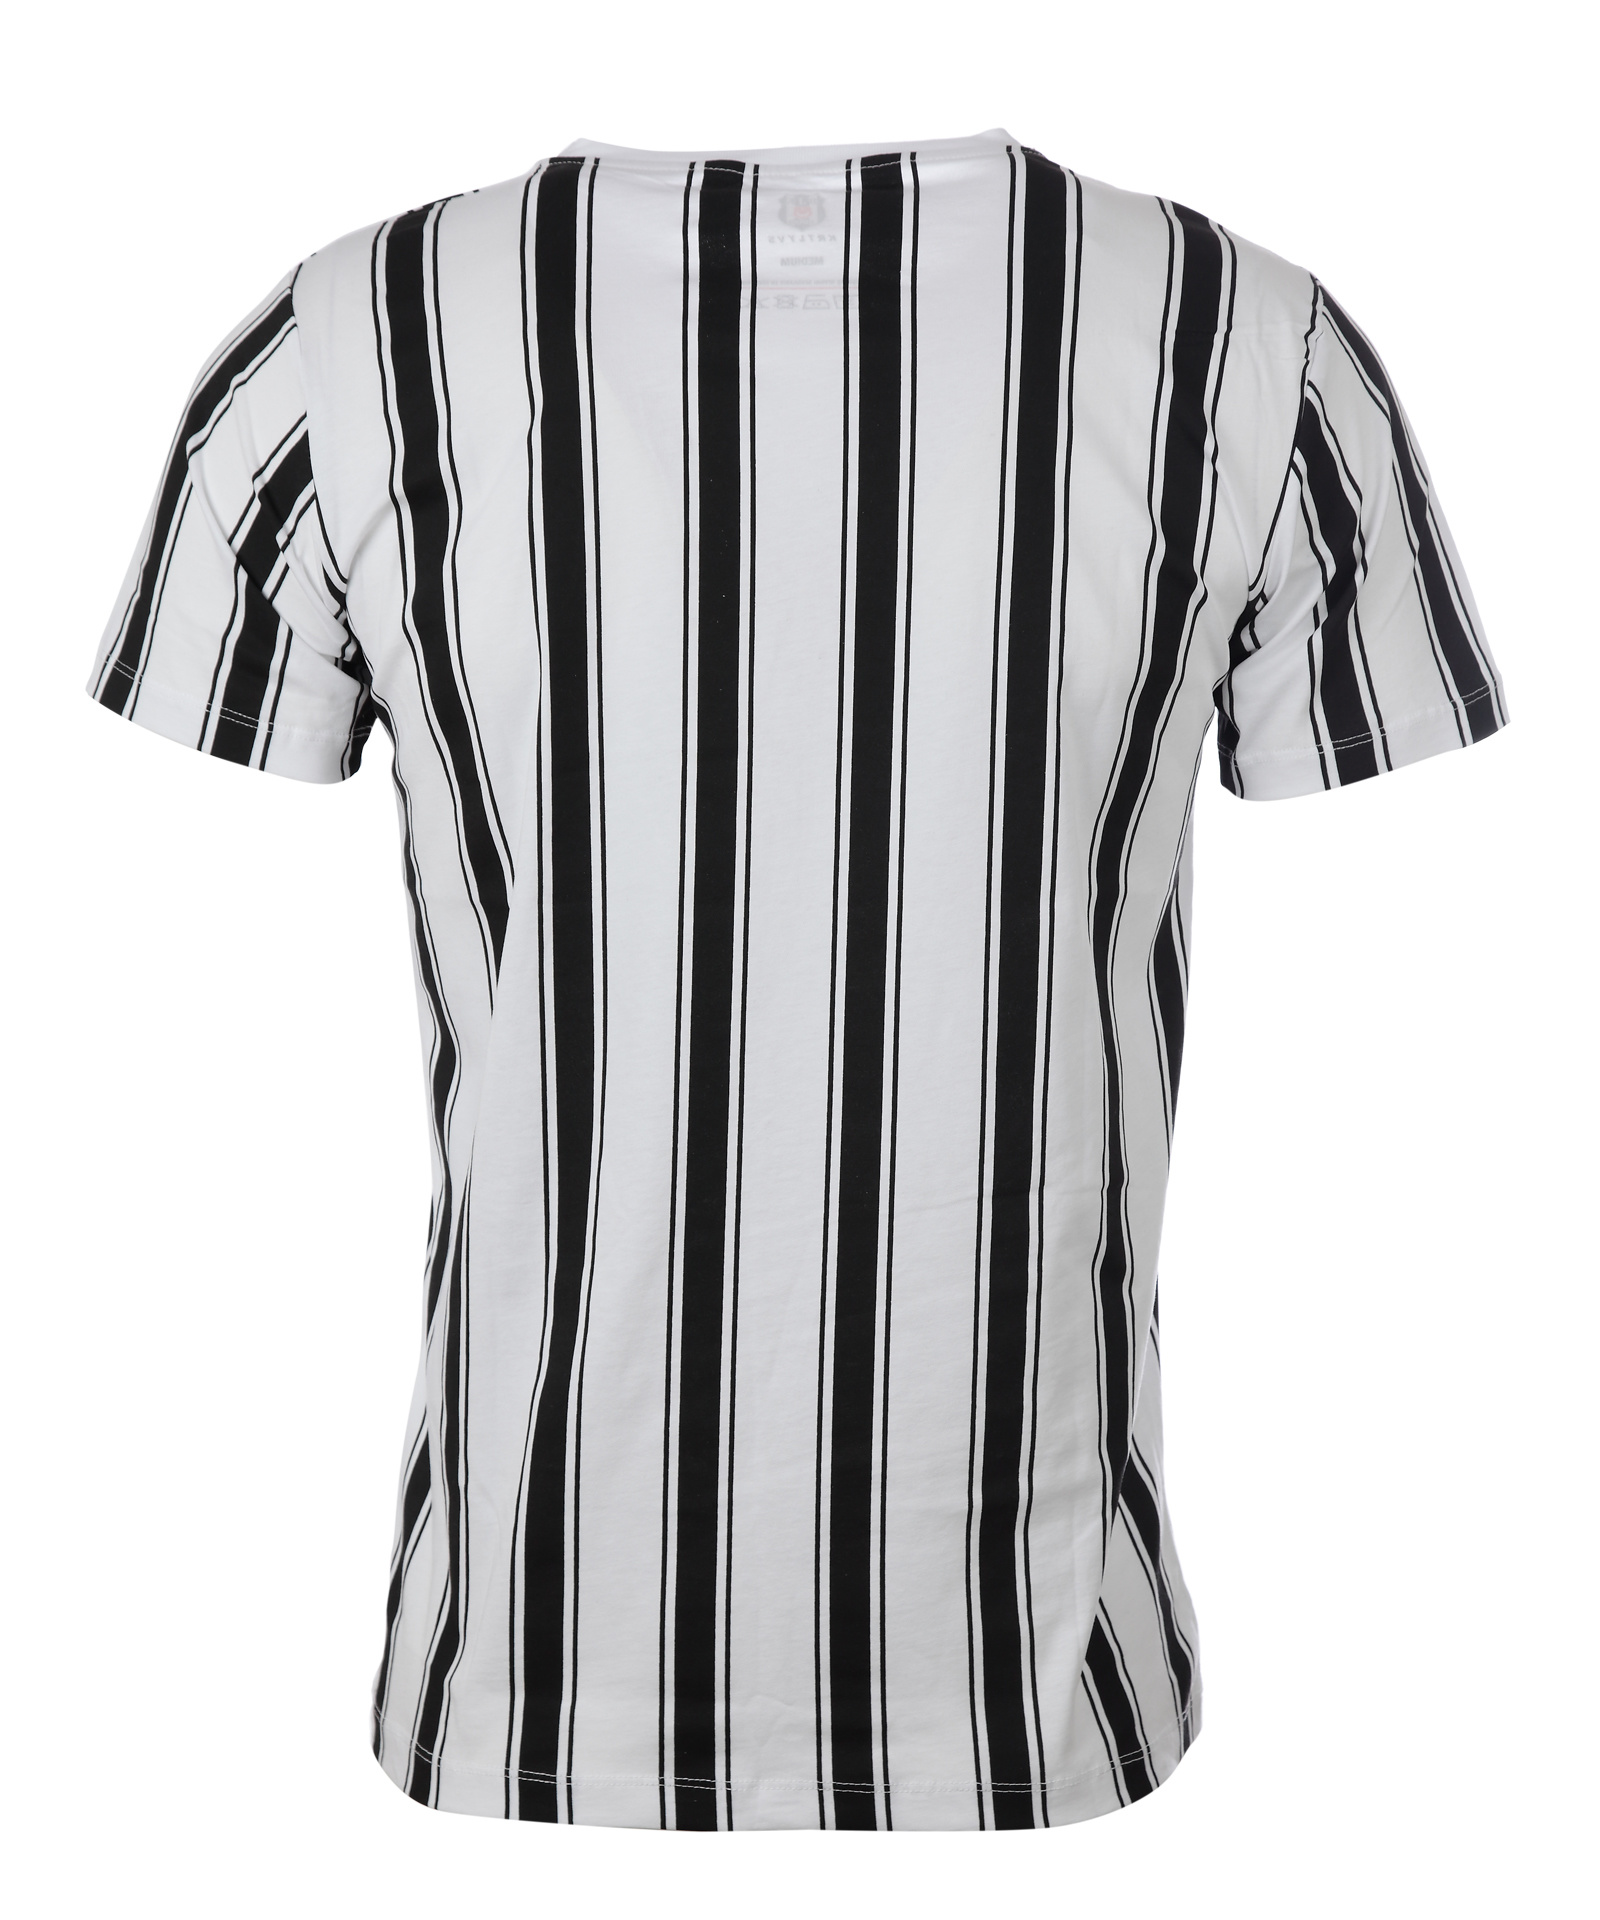 mens striped t shirt black and white